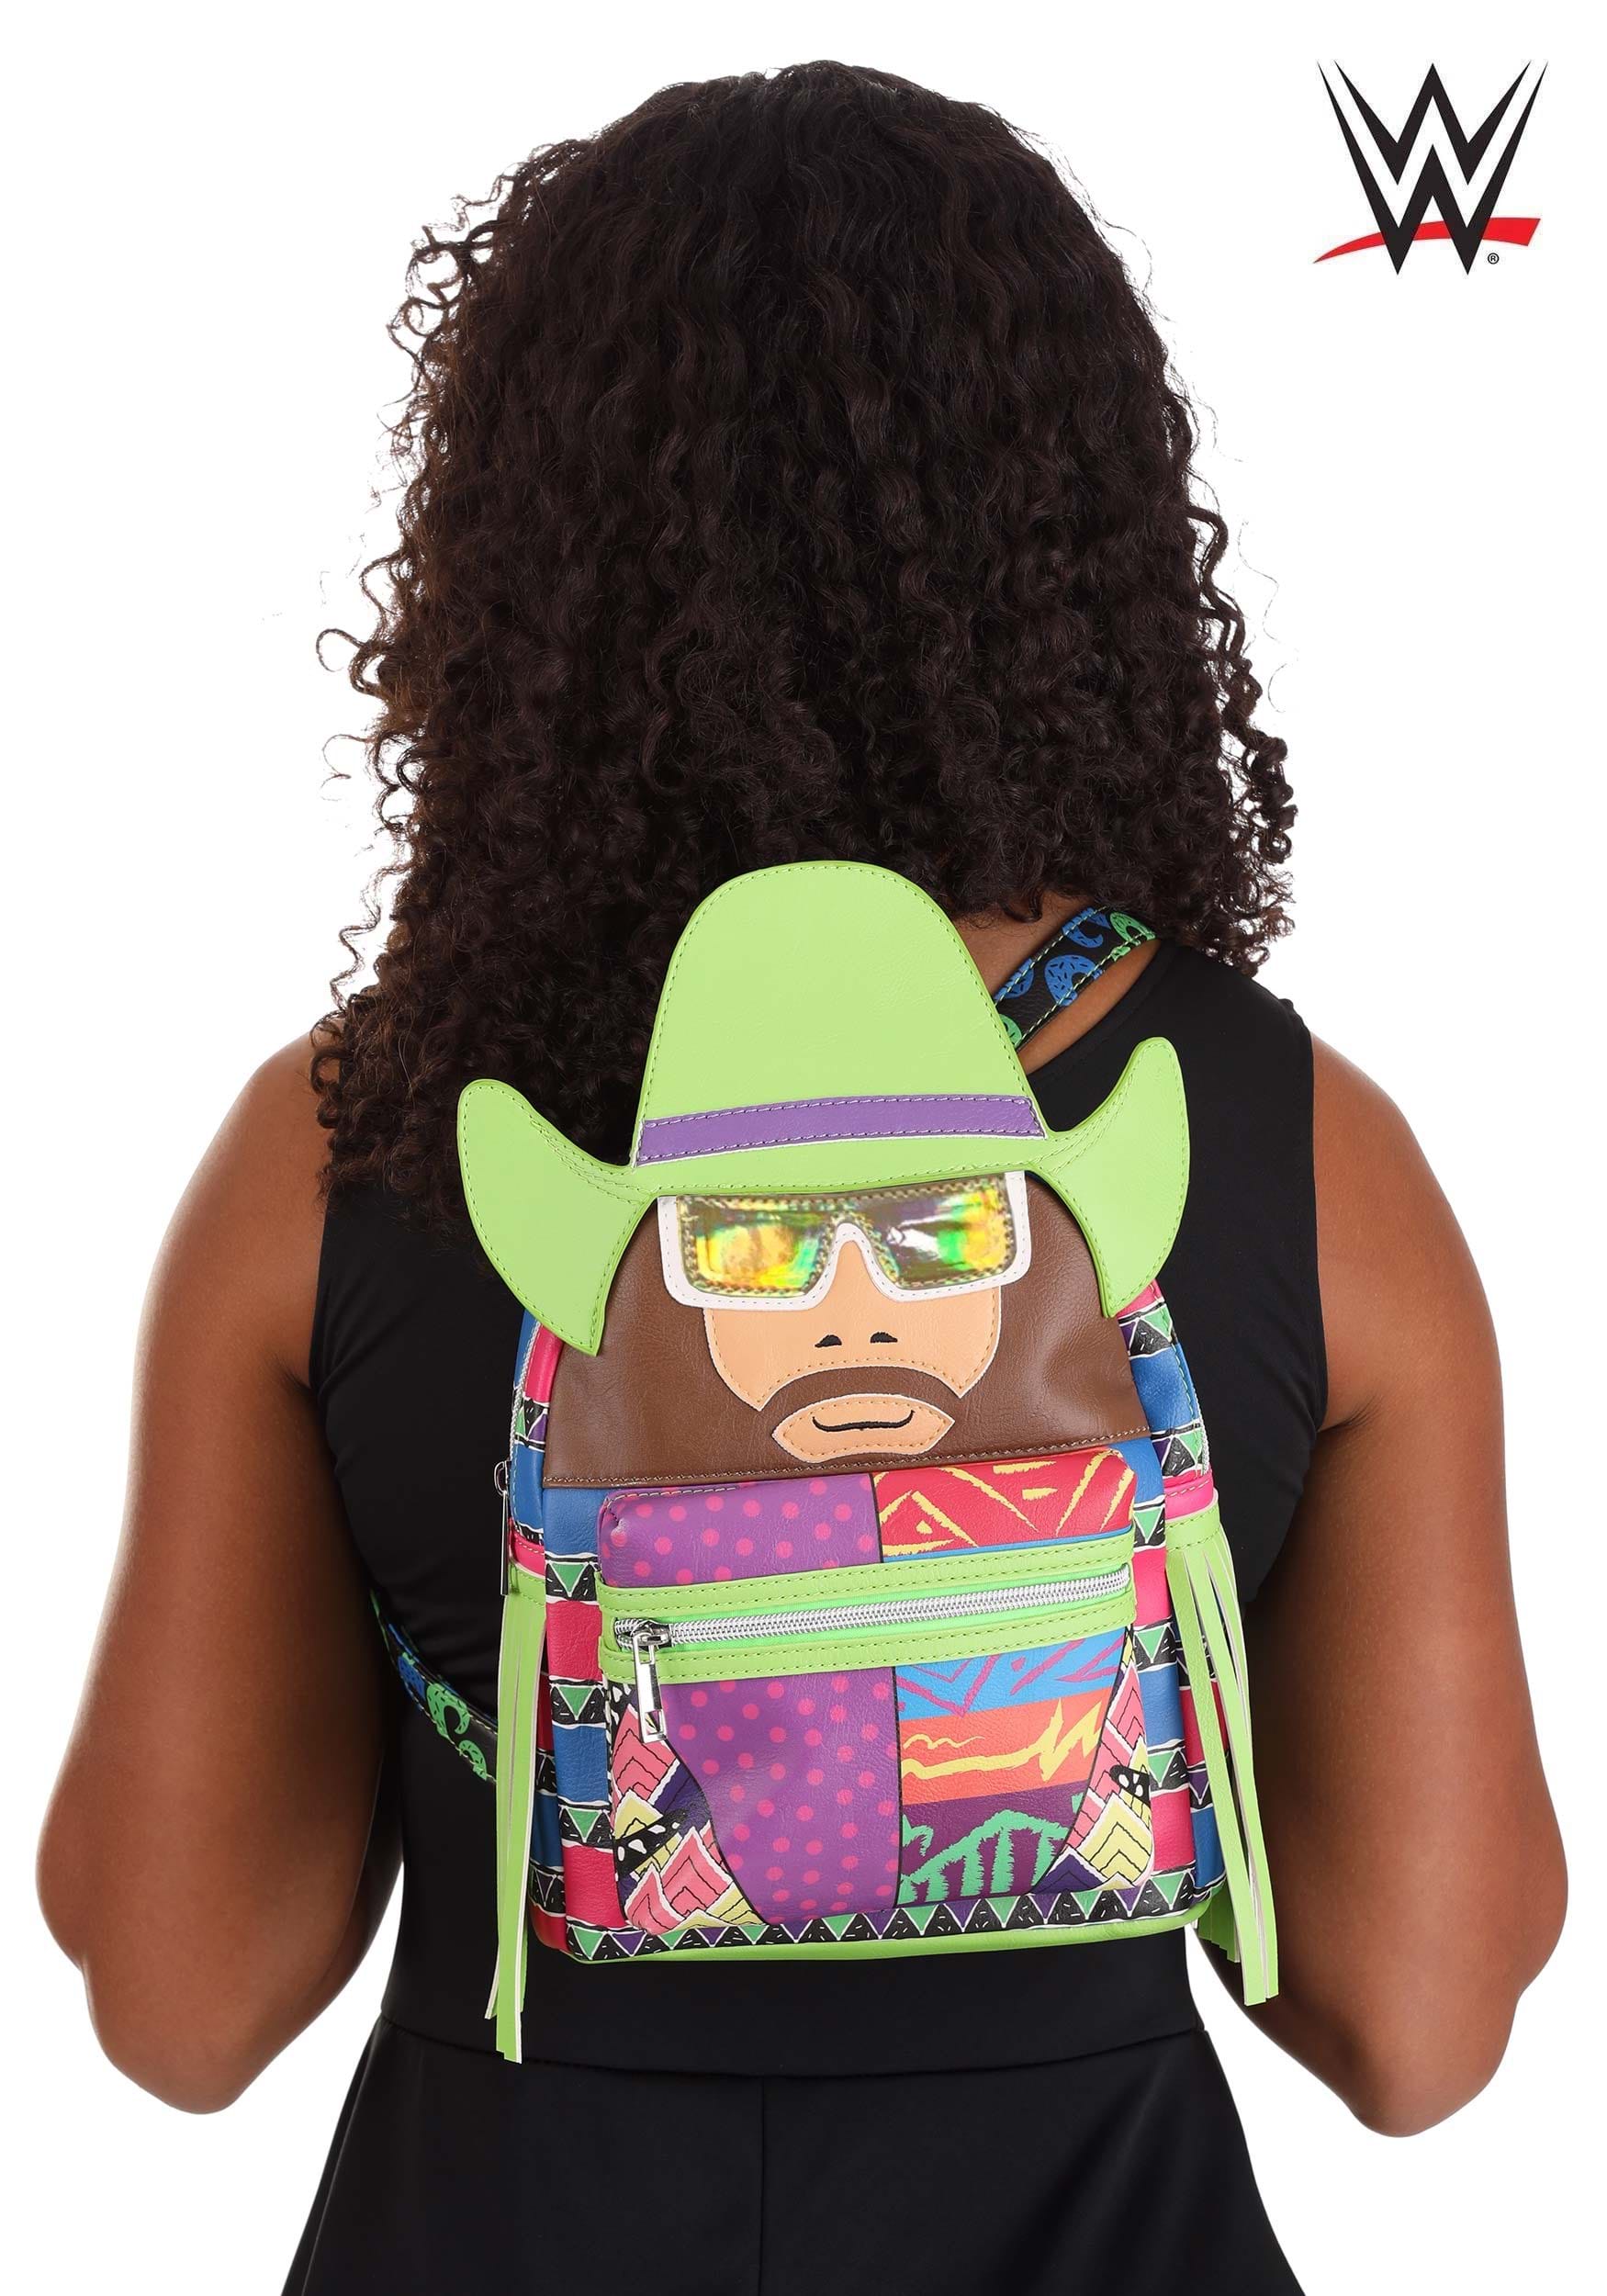 Macho Man Randy Savage Backpack